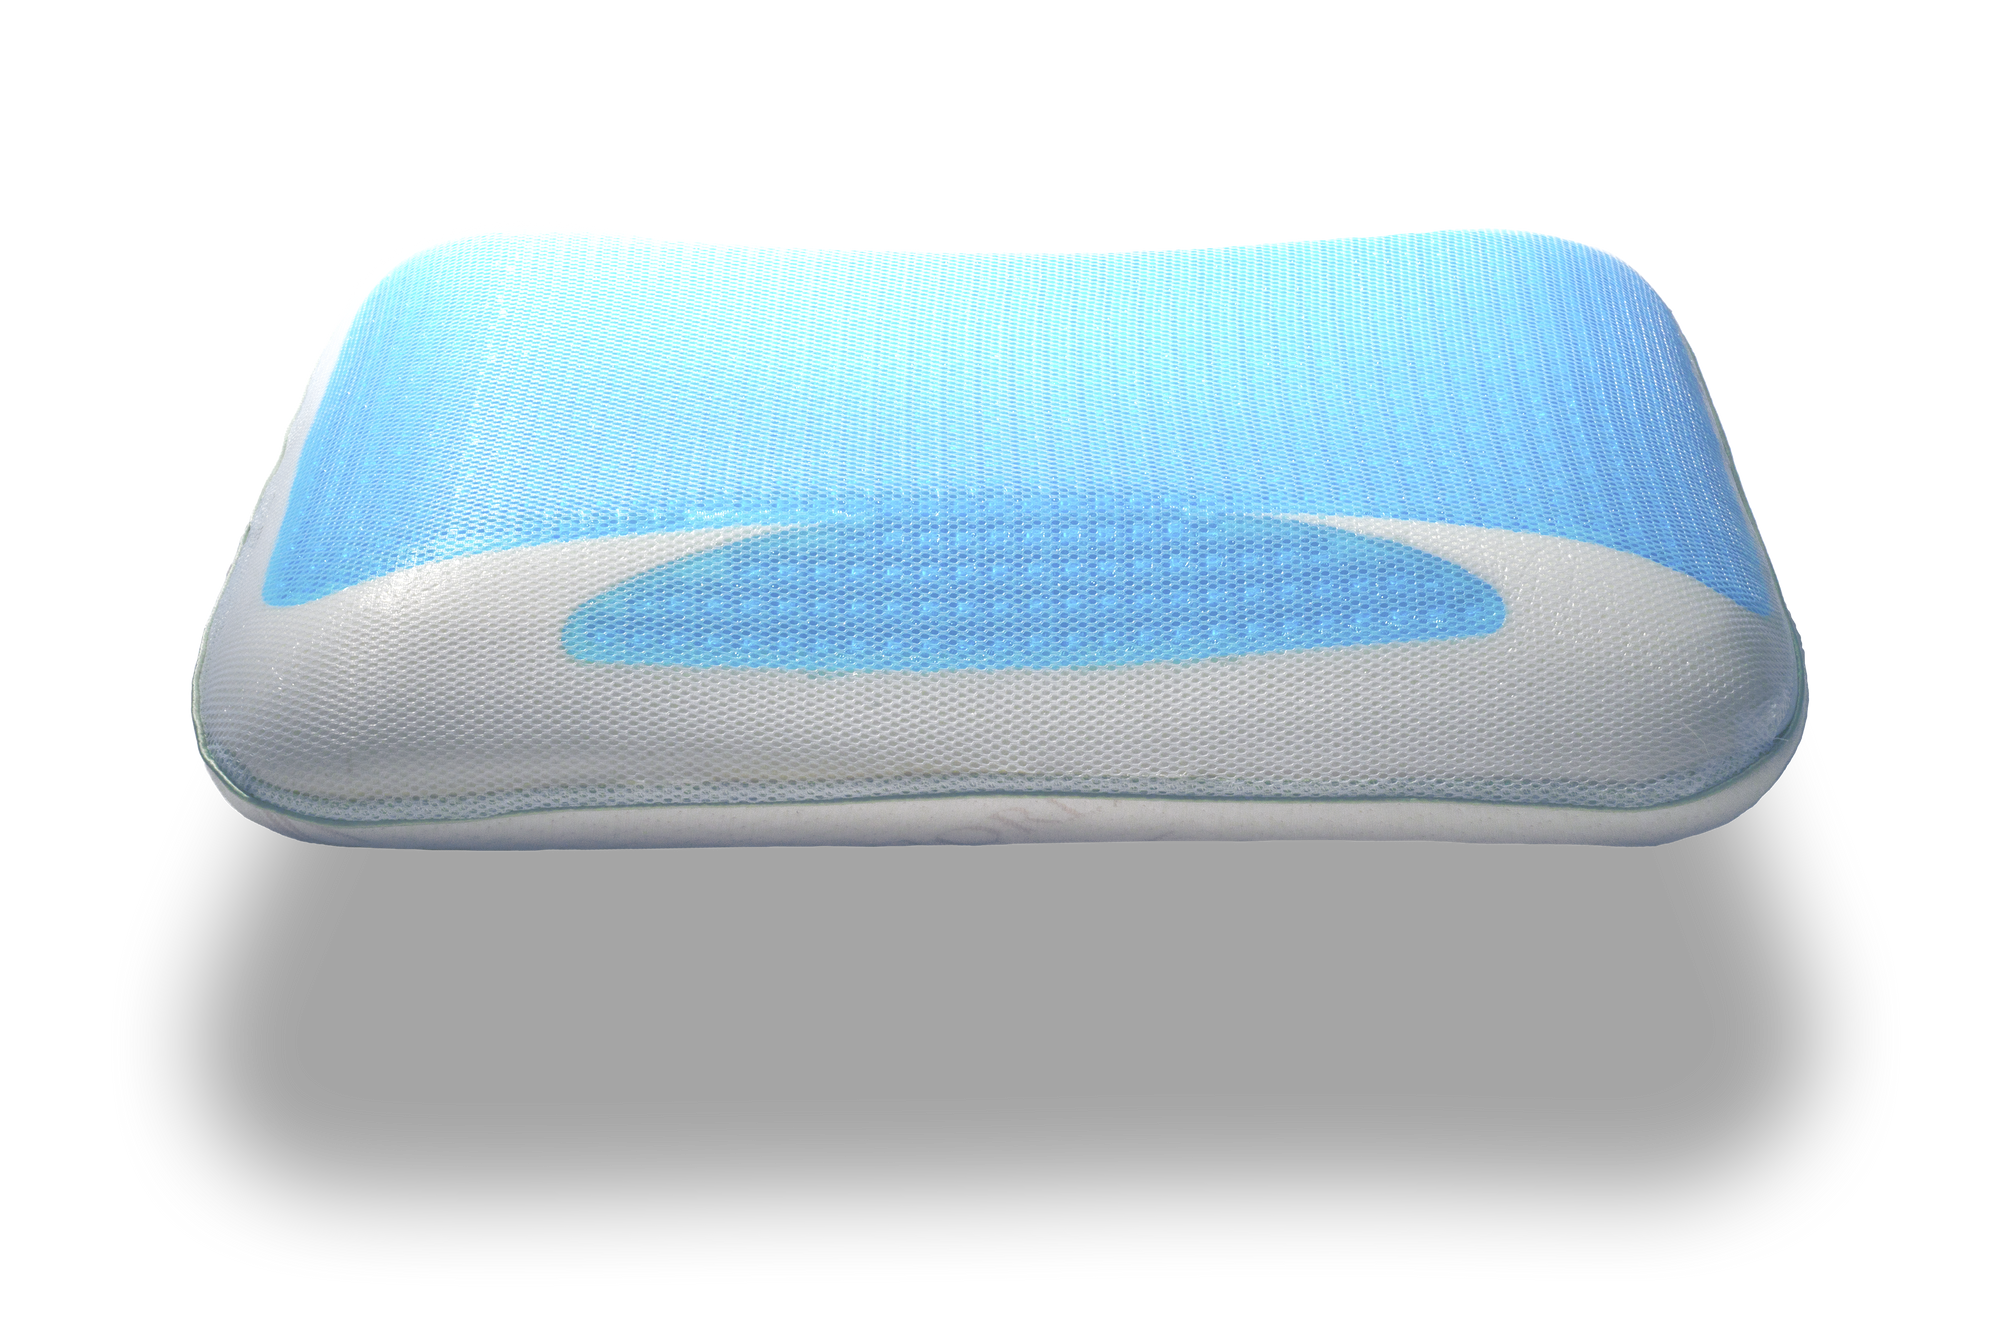 cooling gel pillow